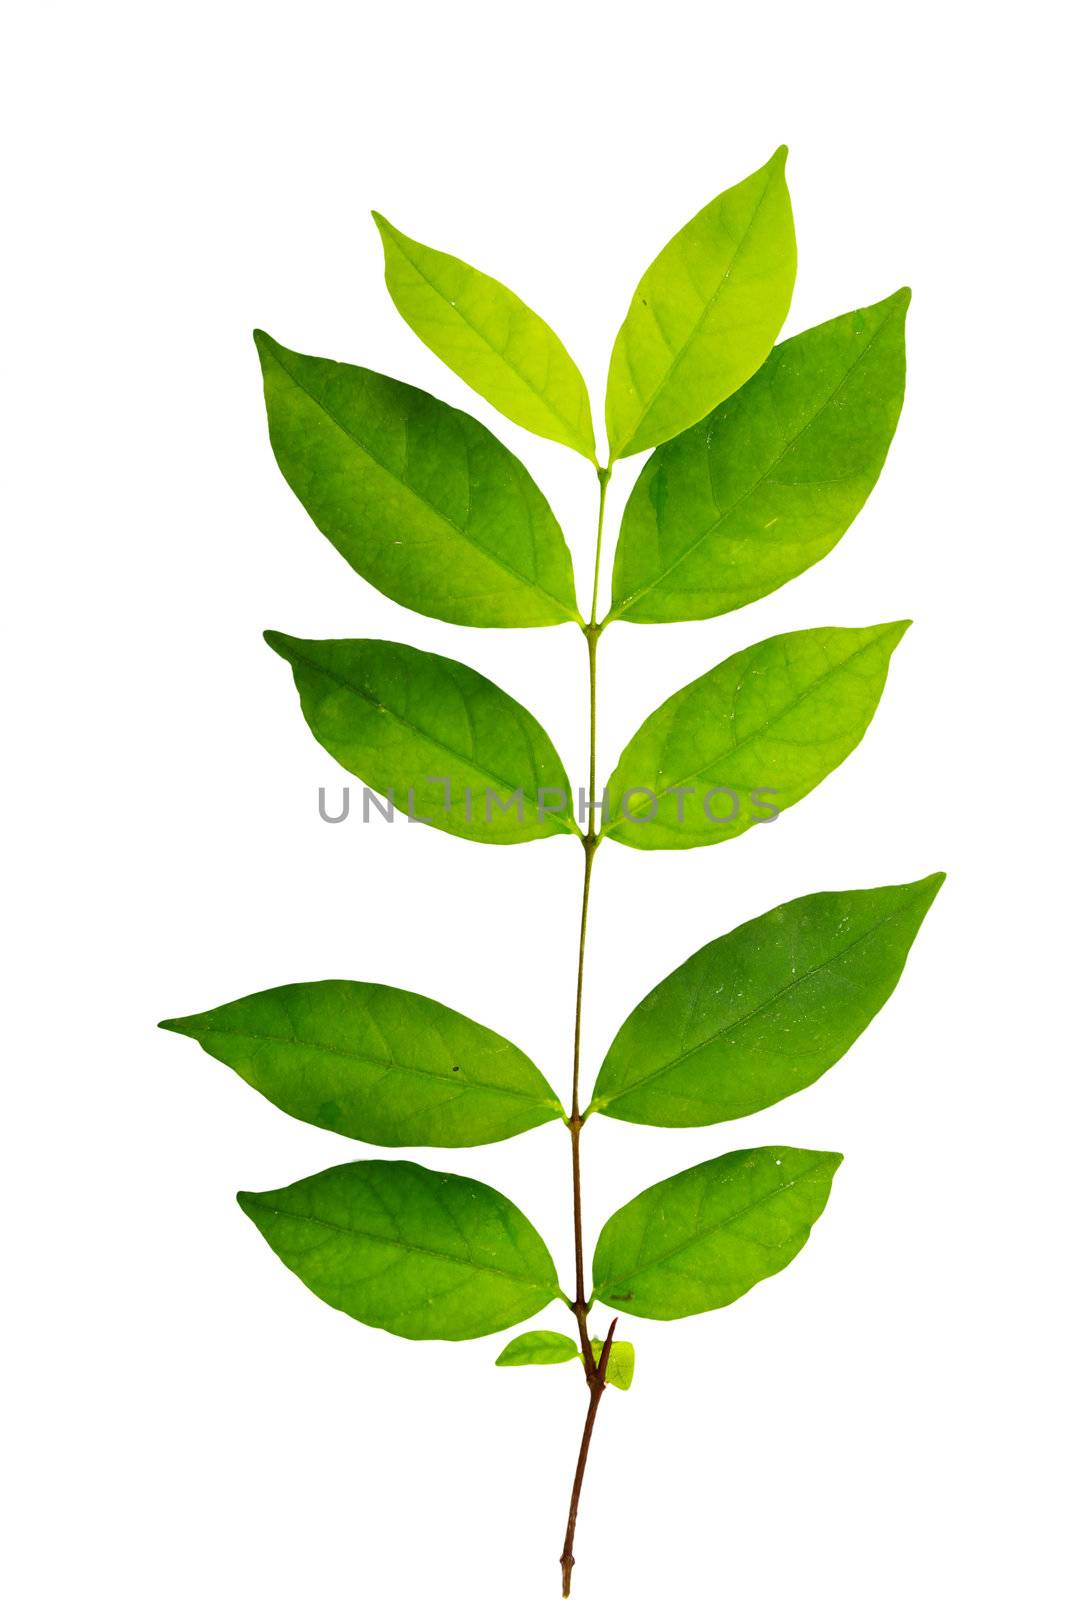 Green leaf isolated on white background by bajita111122